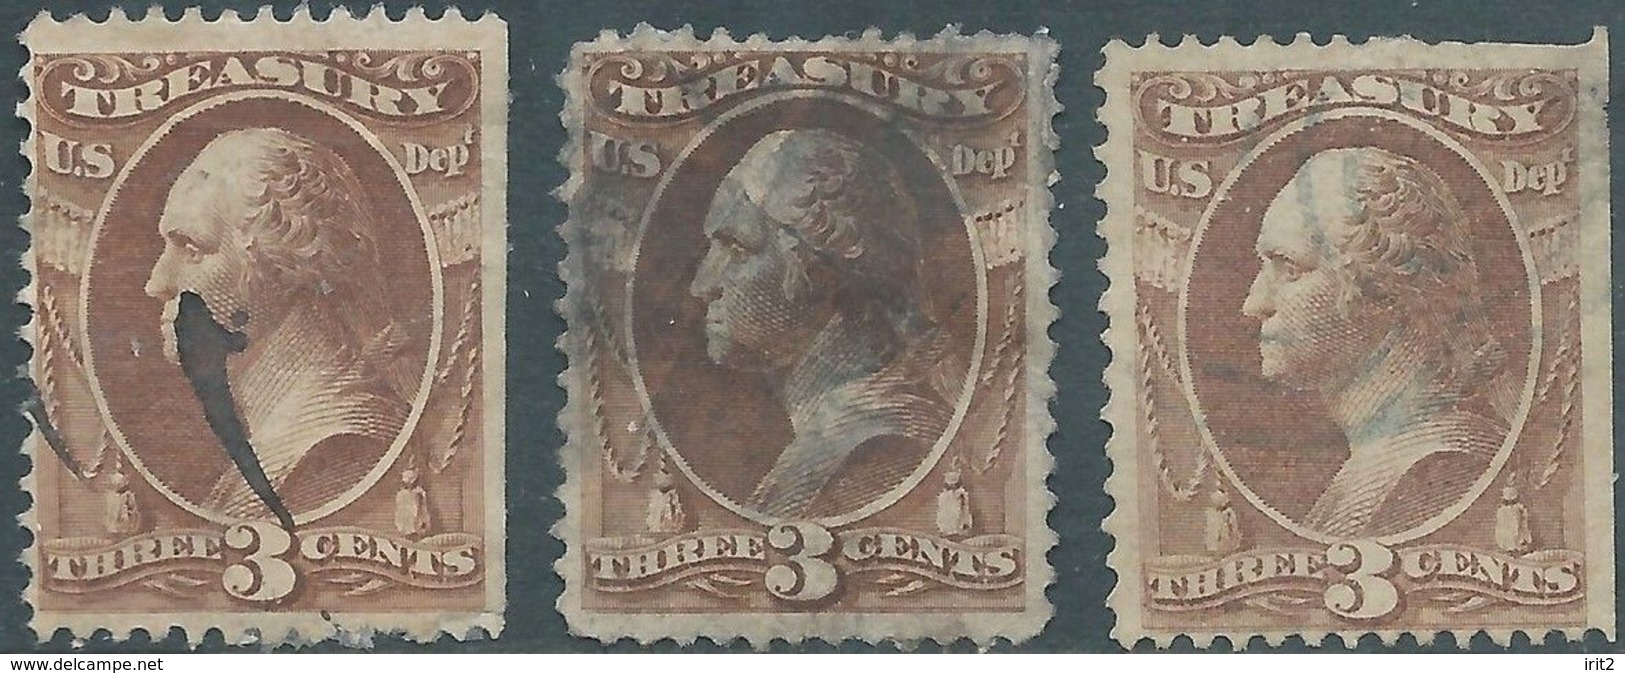 Stati Uniti D'america,United States,U.S.A,1873 Revenue Stamps 3c MINISTRY OF TREASURY,Used - Dienstzegels